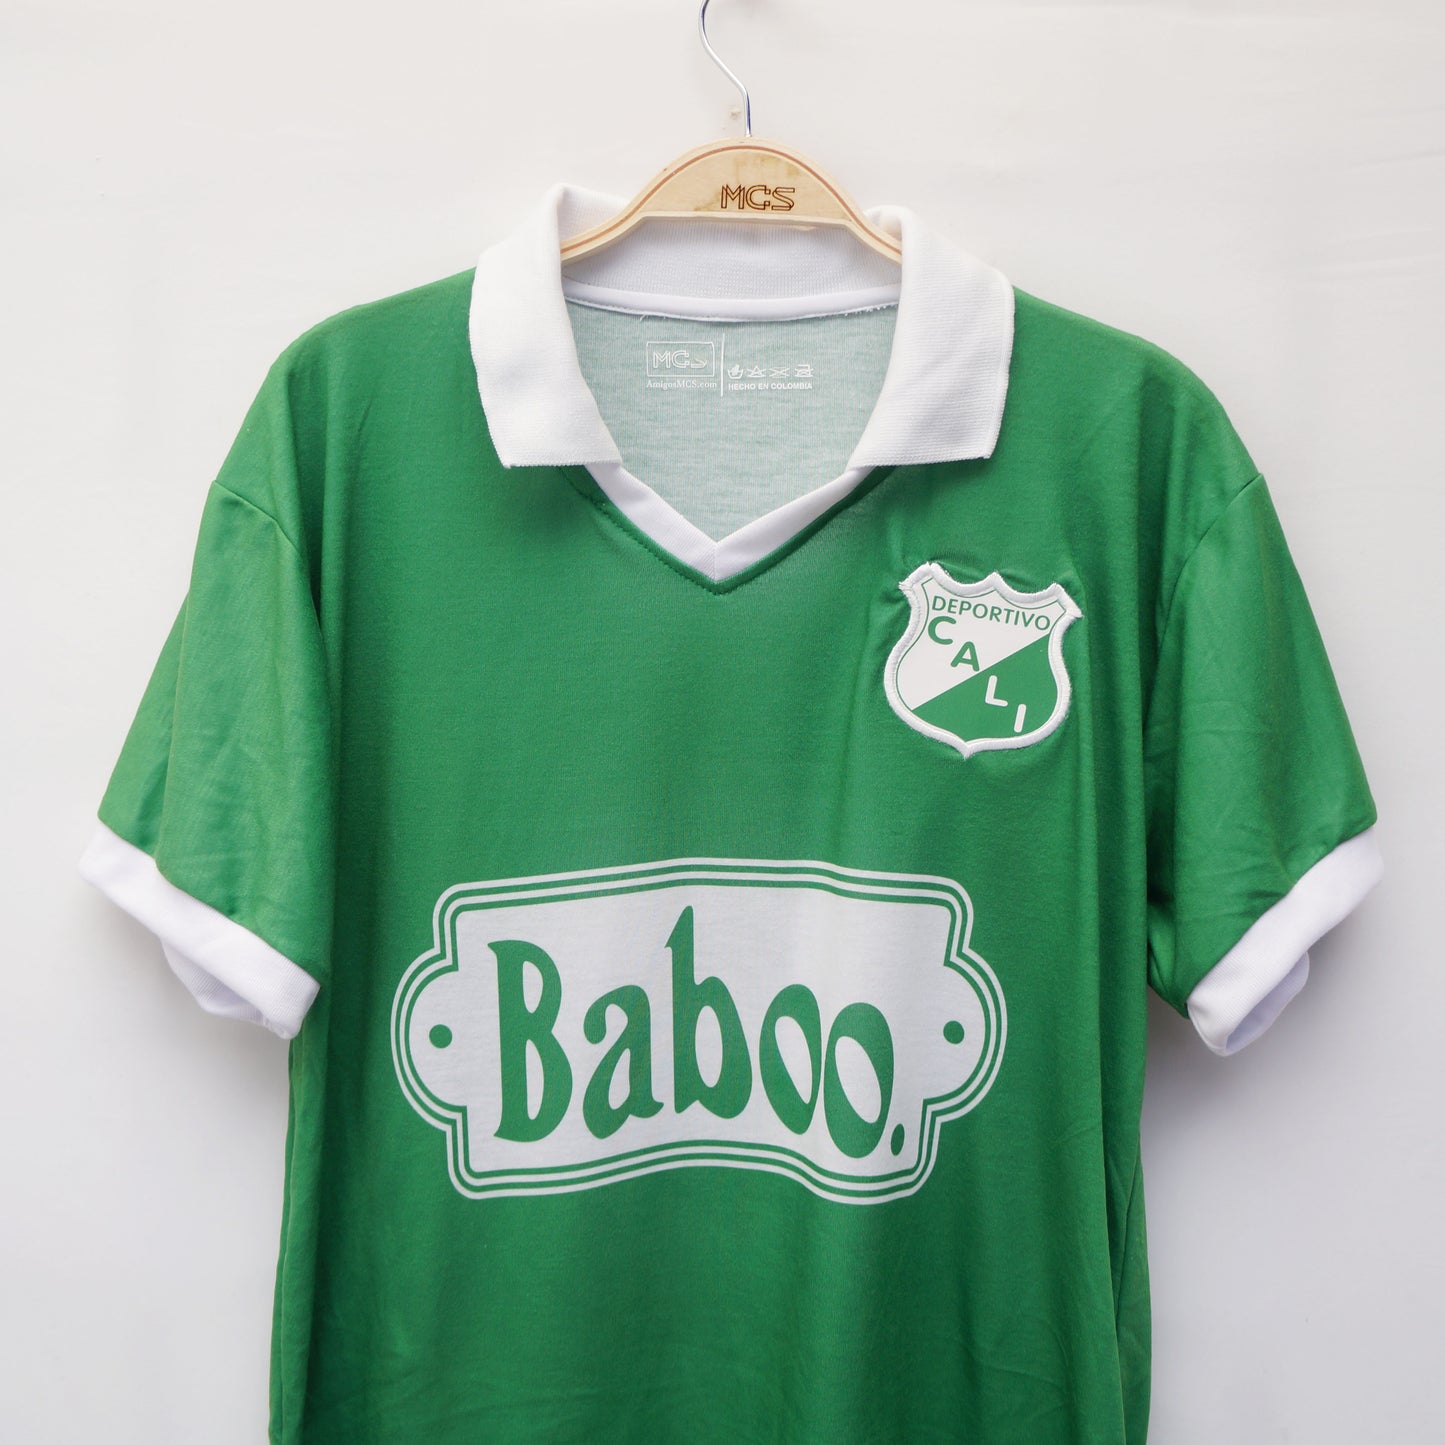 T-shirt Sports Cali Adidas 1996